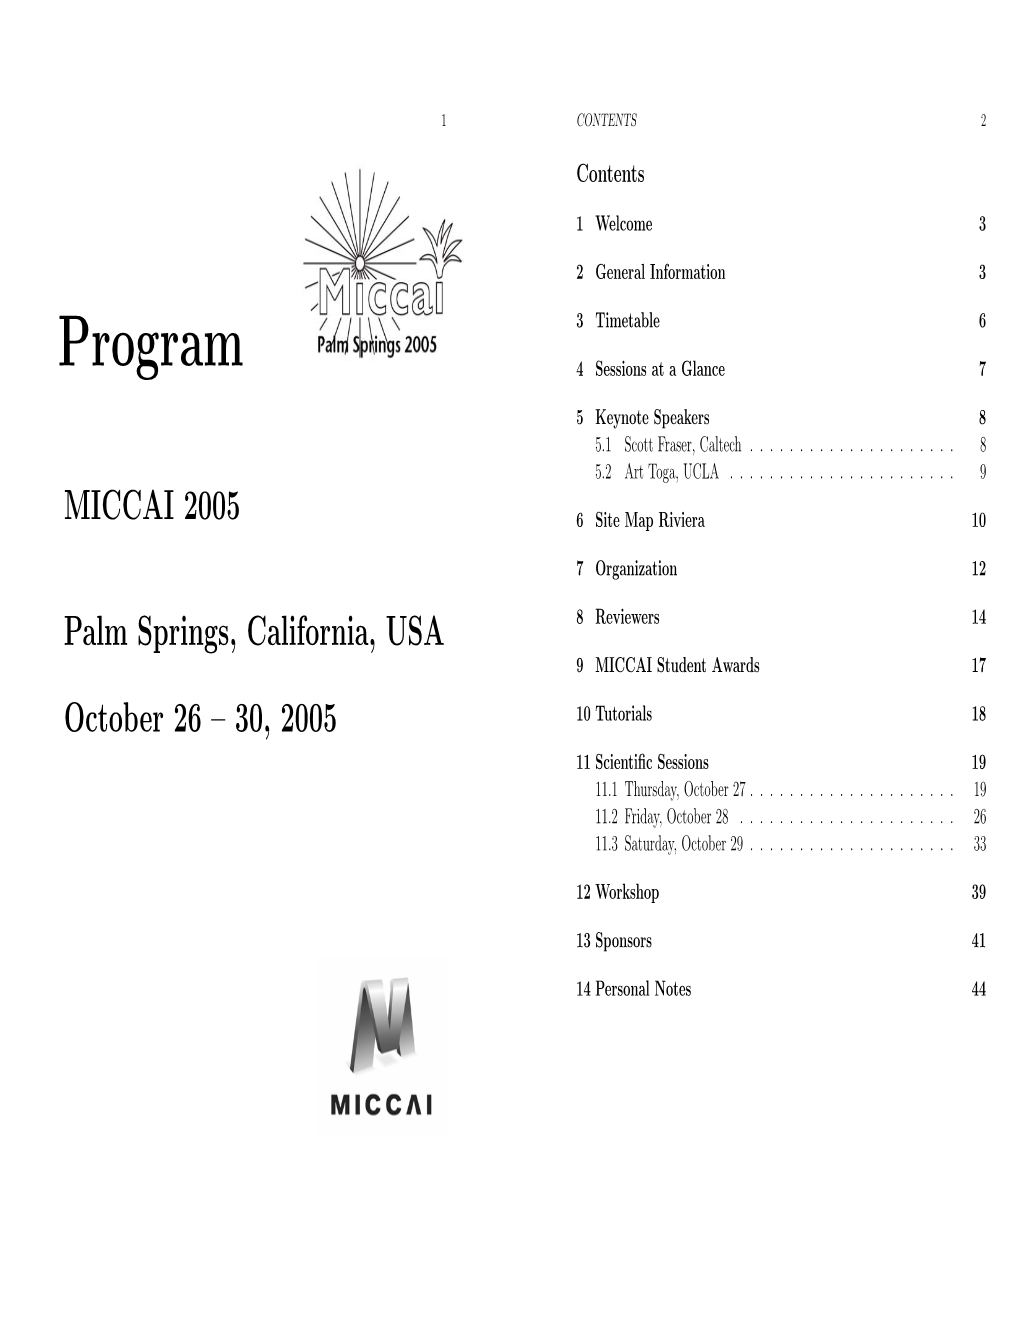 MICCAI 2005 Final Program